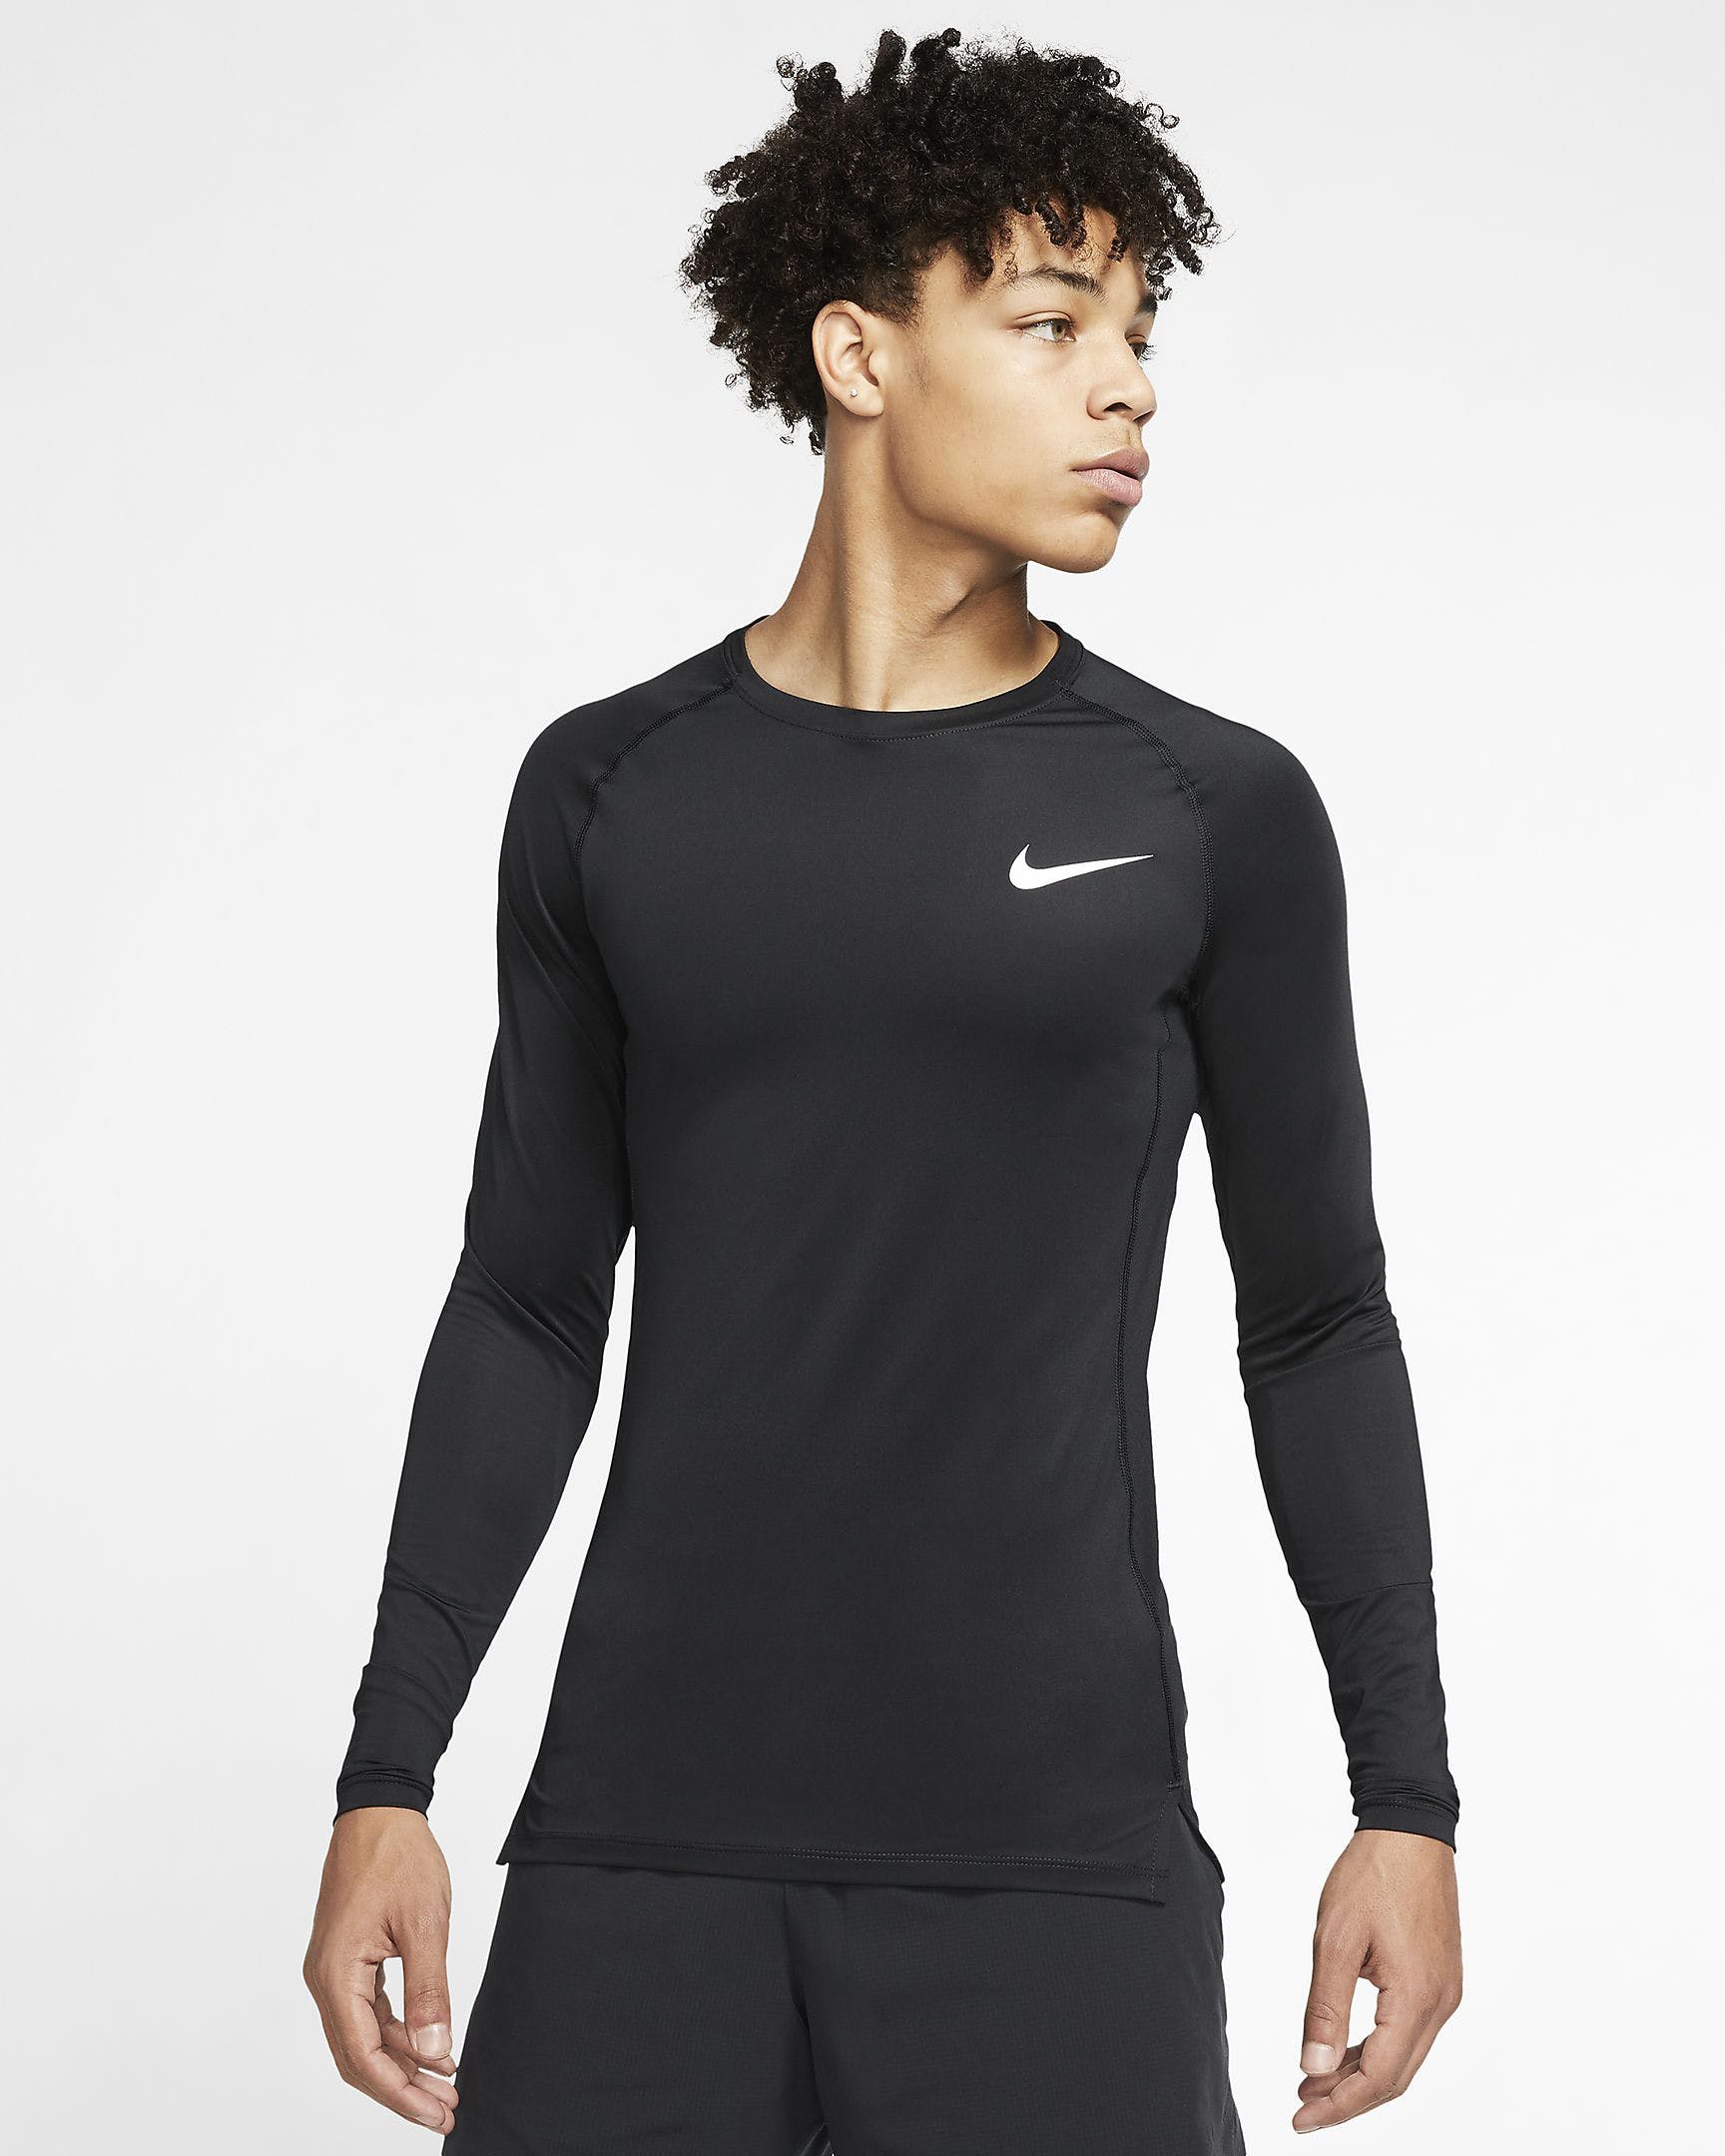 Men's Long-Sleeve Top Nike Pro